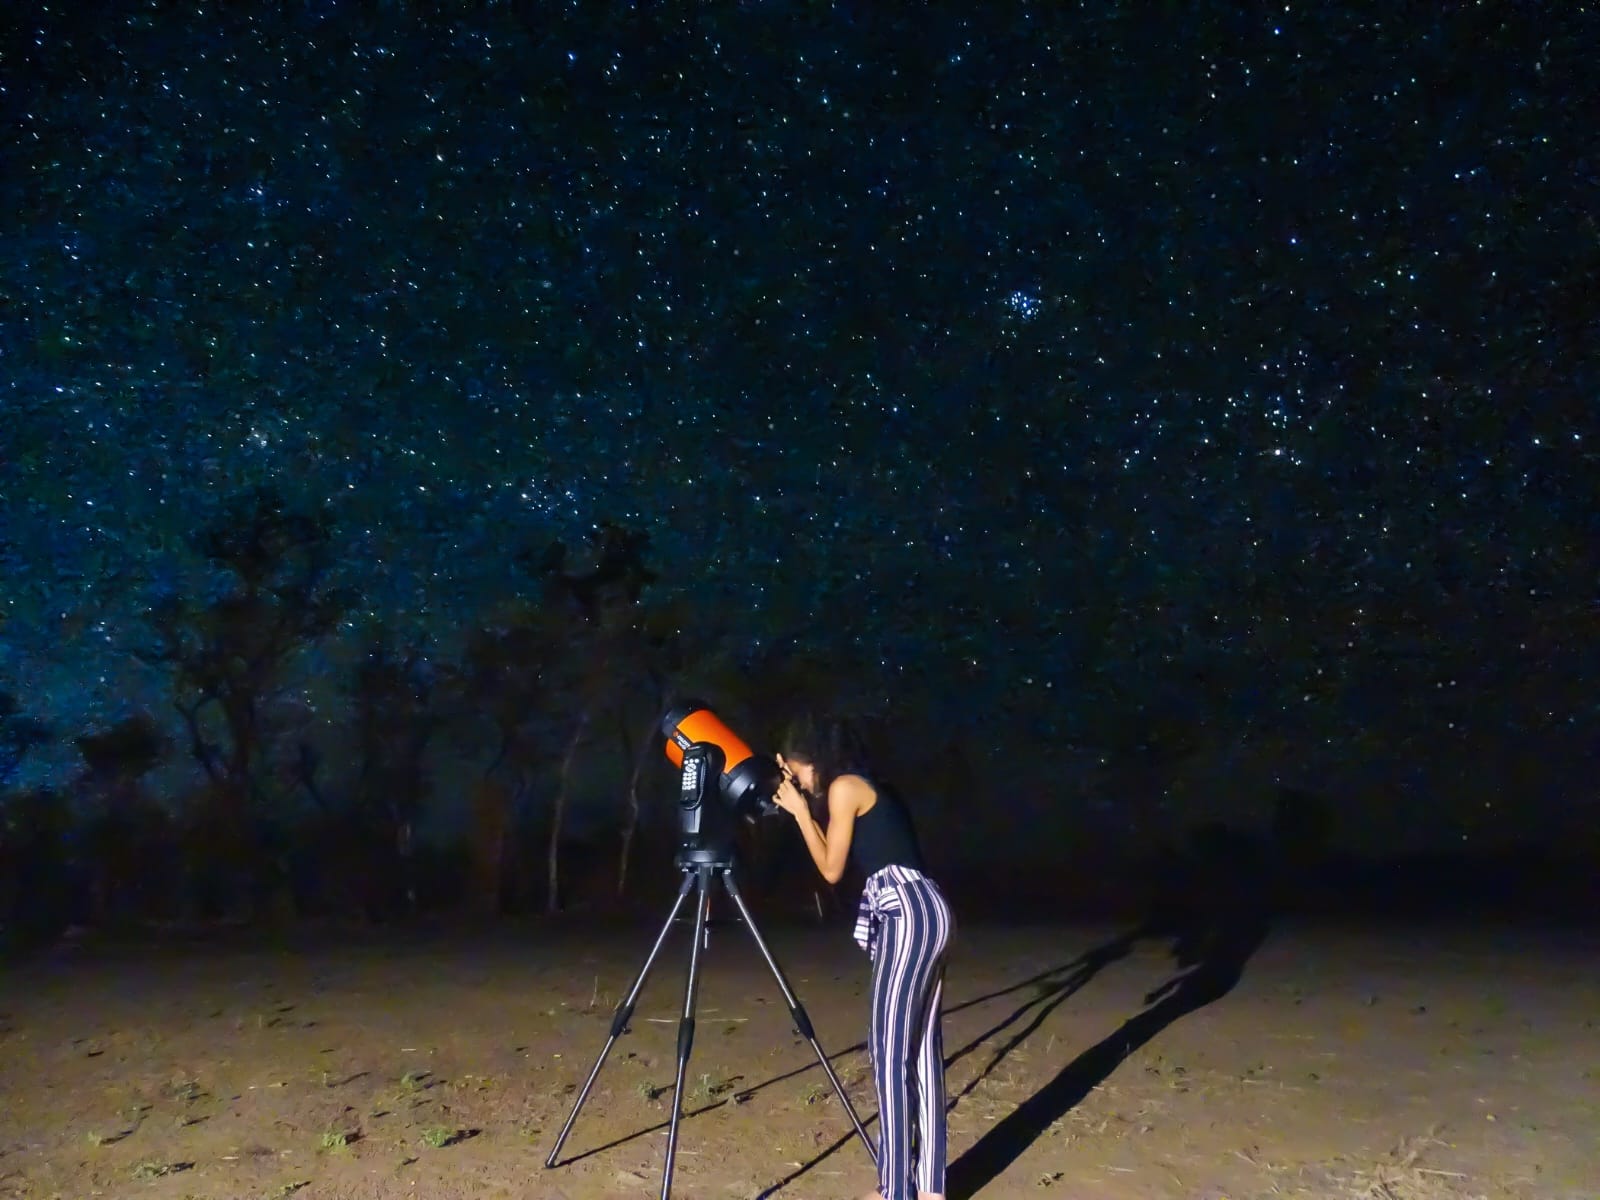 Projeto Astronomia no Sertão promove astrocamping na aldeia indígena Arymy